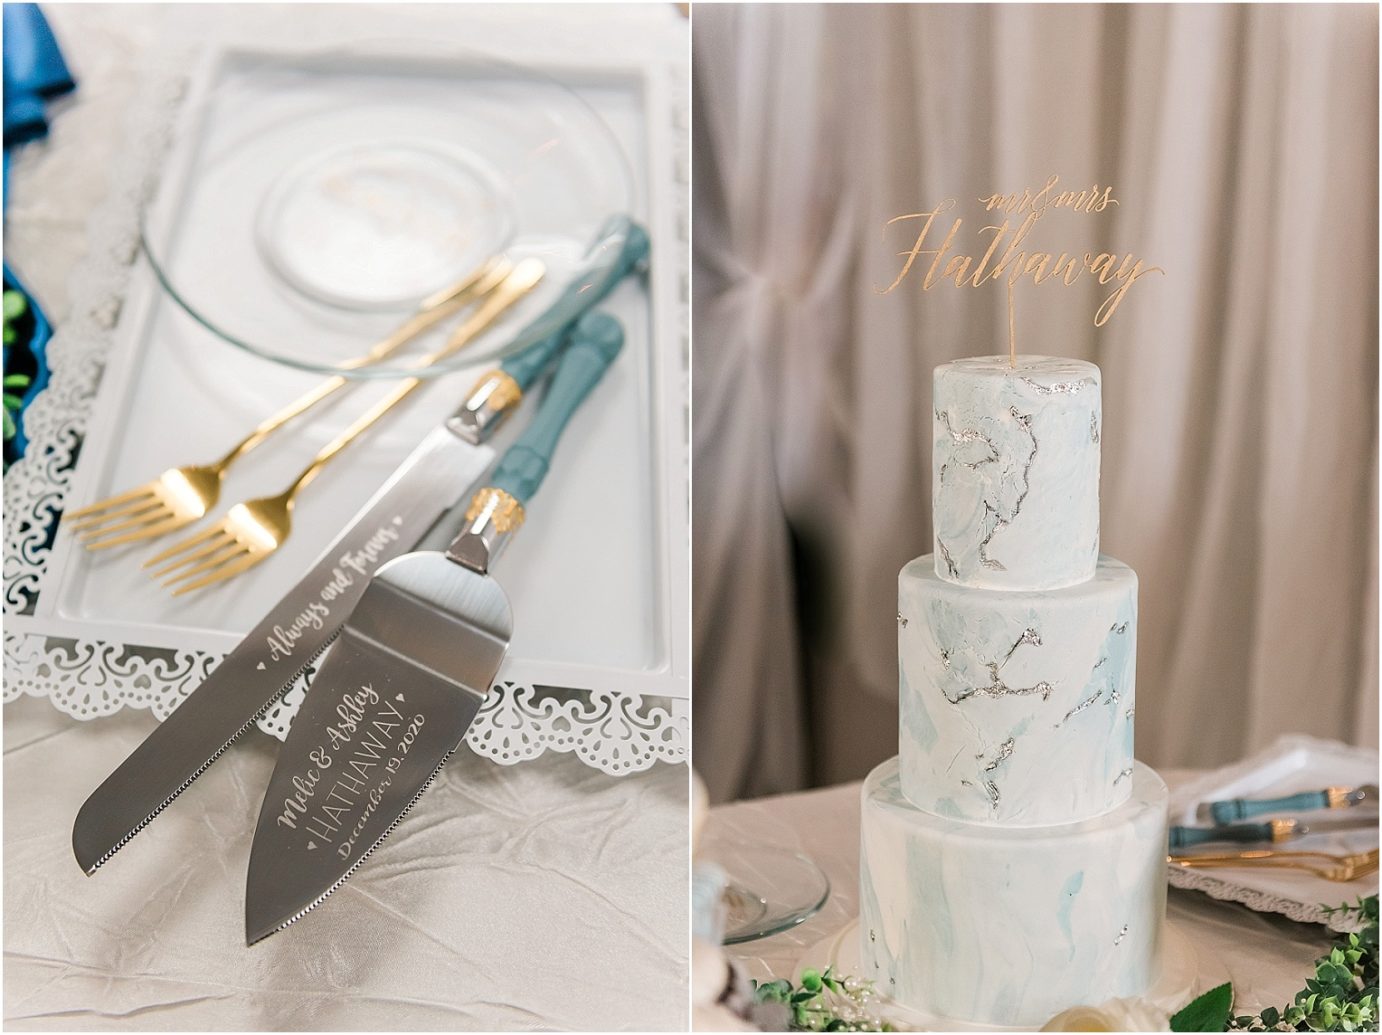 Intimate church wedding othello wa Melic and ashley cake table